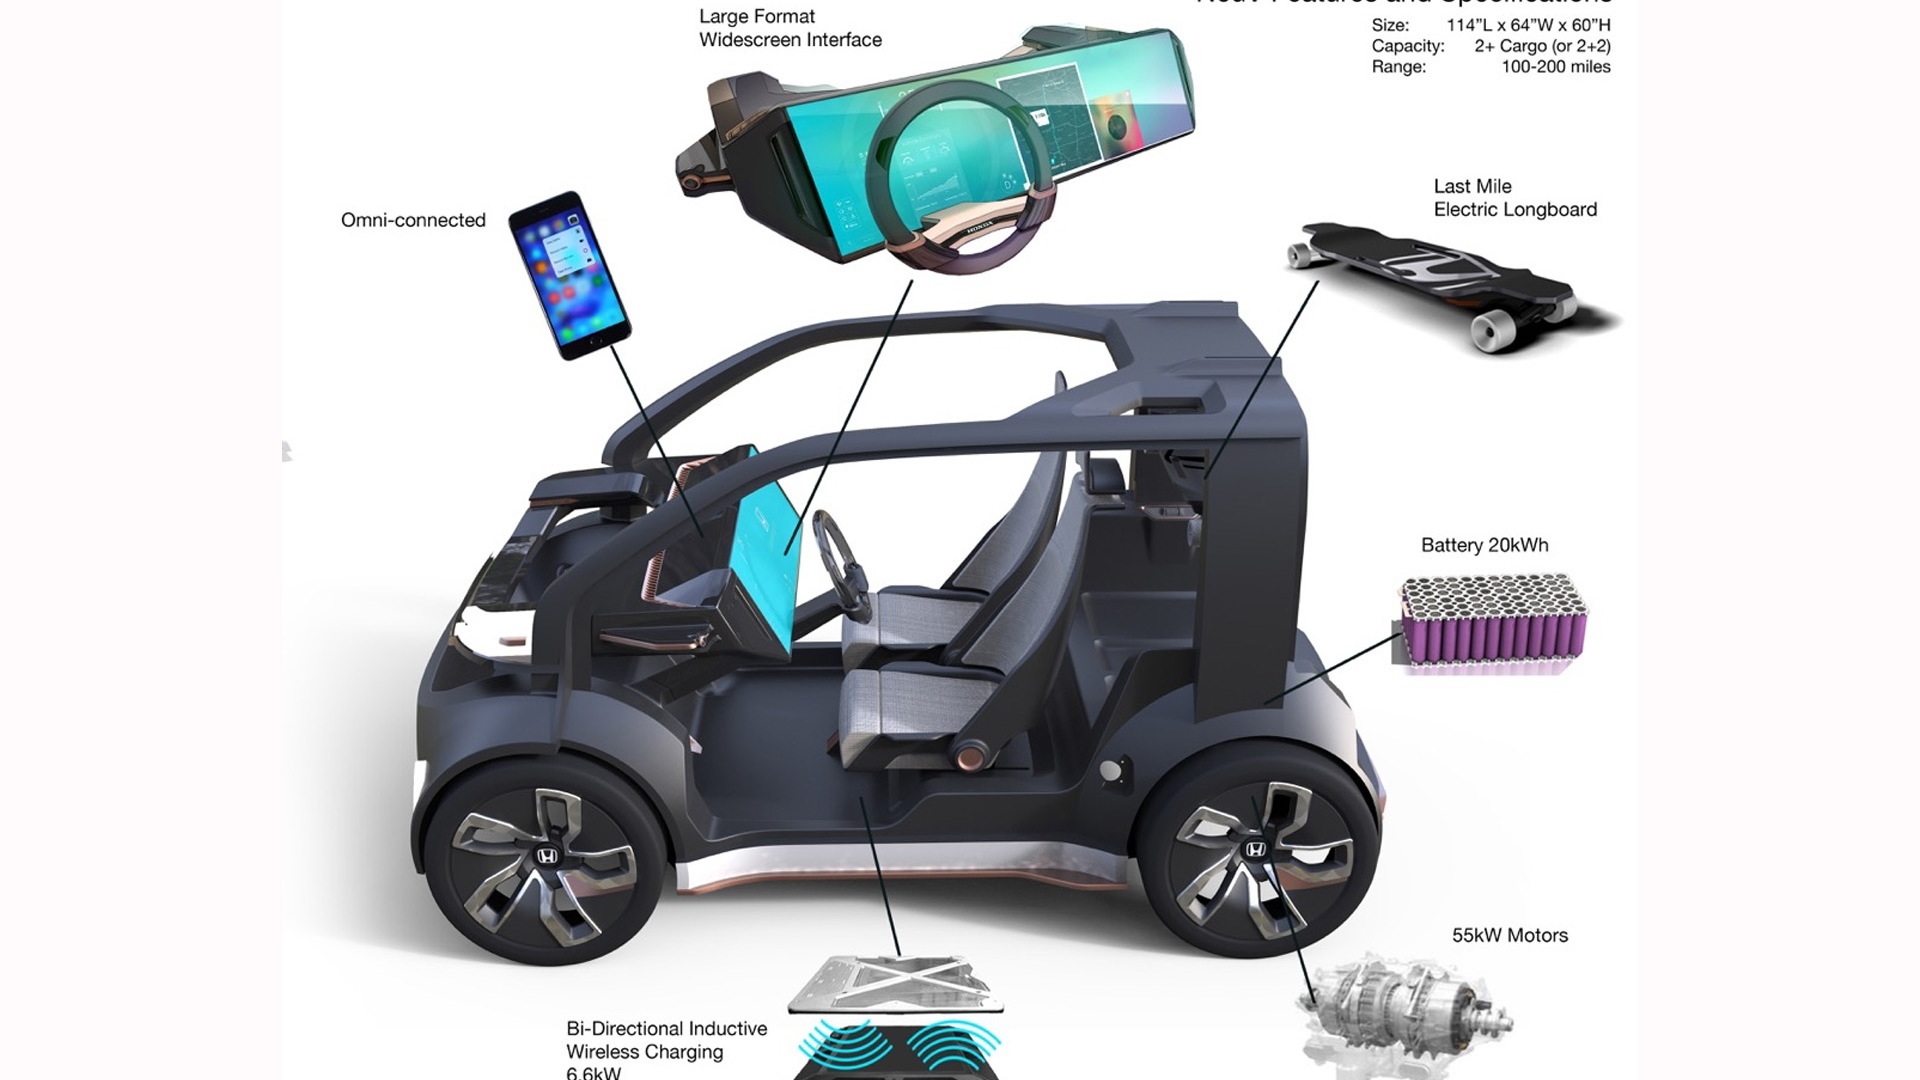 Honda NeuV concept, 2017 Consumer Electronics Show